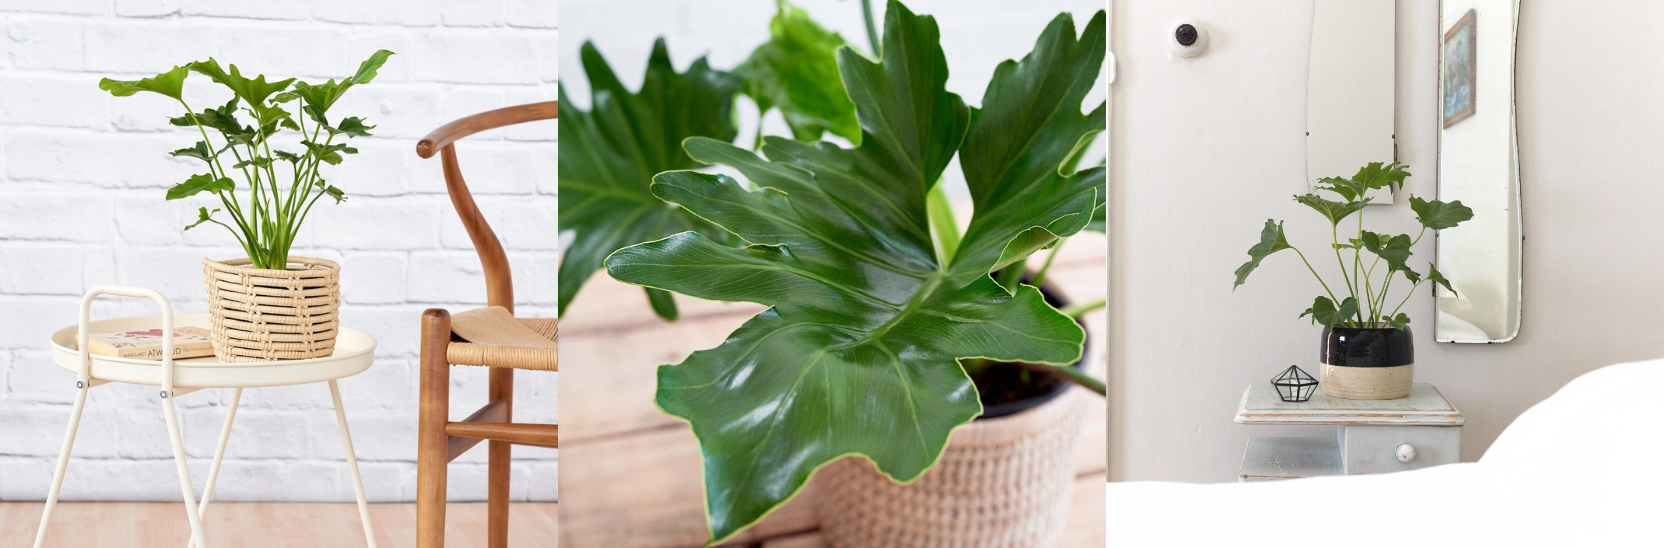 20 Fast Growing Indoor Plants - Split leaf Philodendron